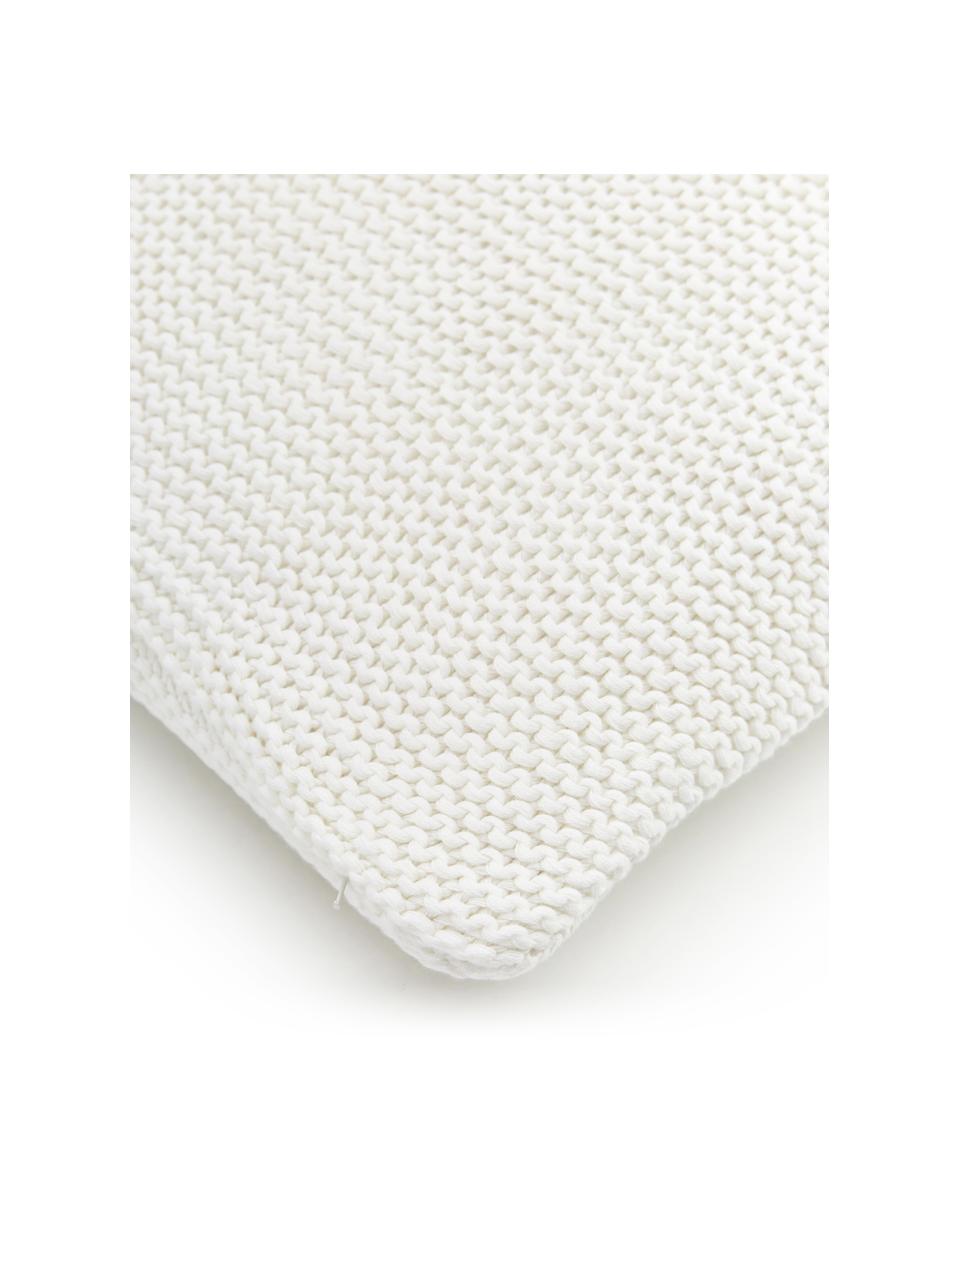 Federa arredo a maglia Adalyn, 100% cotone organico certificato GOTS, Bianco, Larg. 40 x Lung. 60 cm